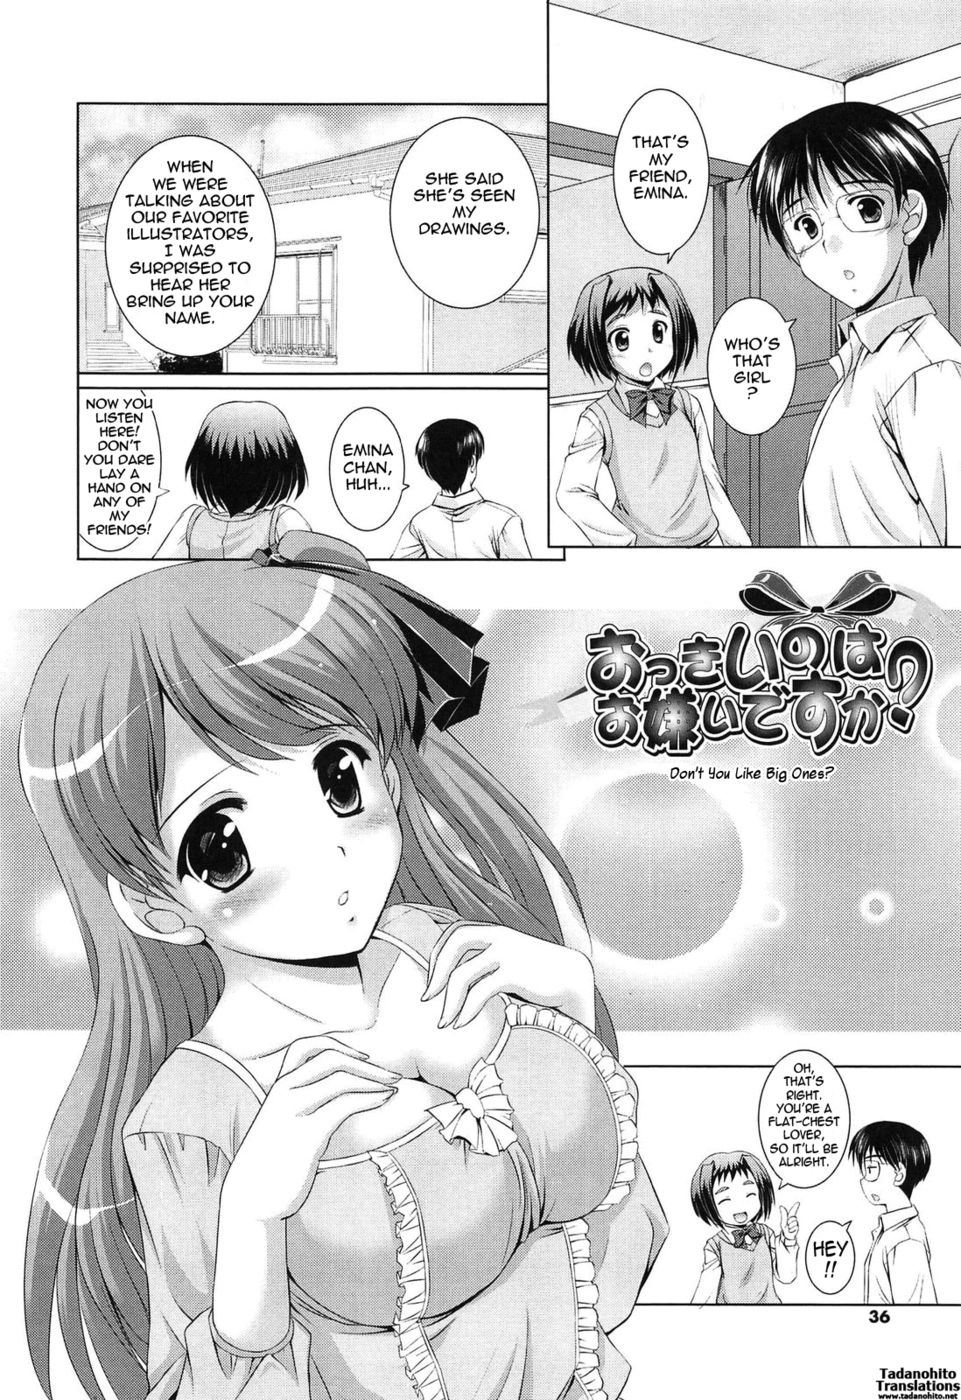 Hentai Manga Comic-Younger Girls Celebration-Chapter 4 - Don't You Like Big Ones?-2